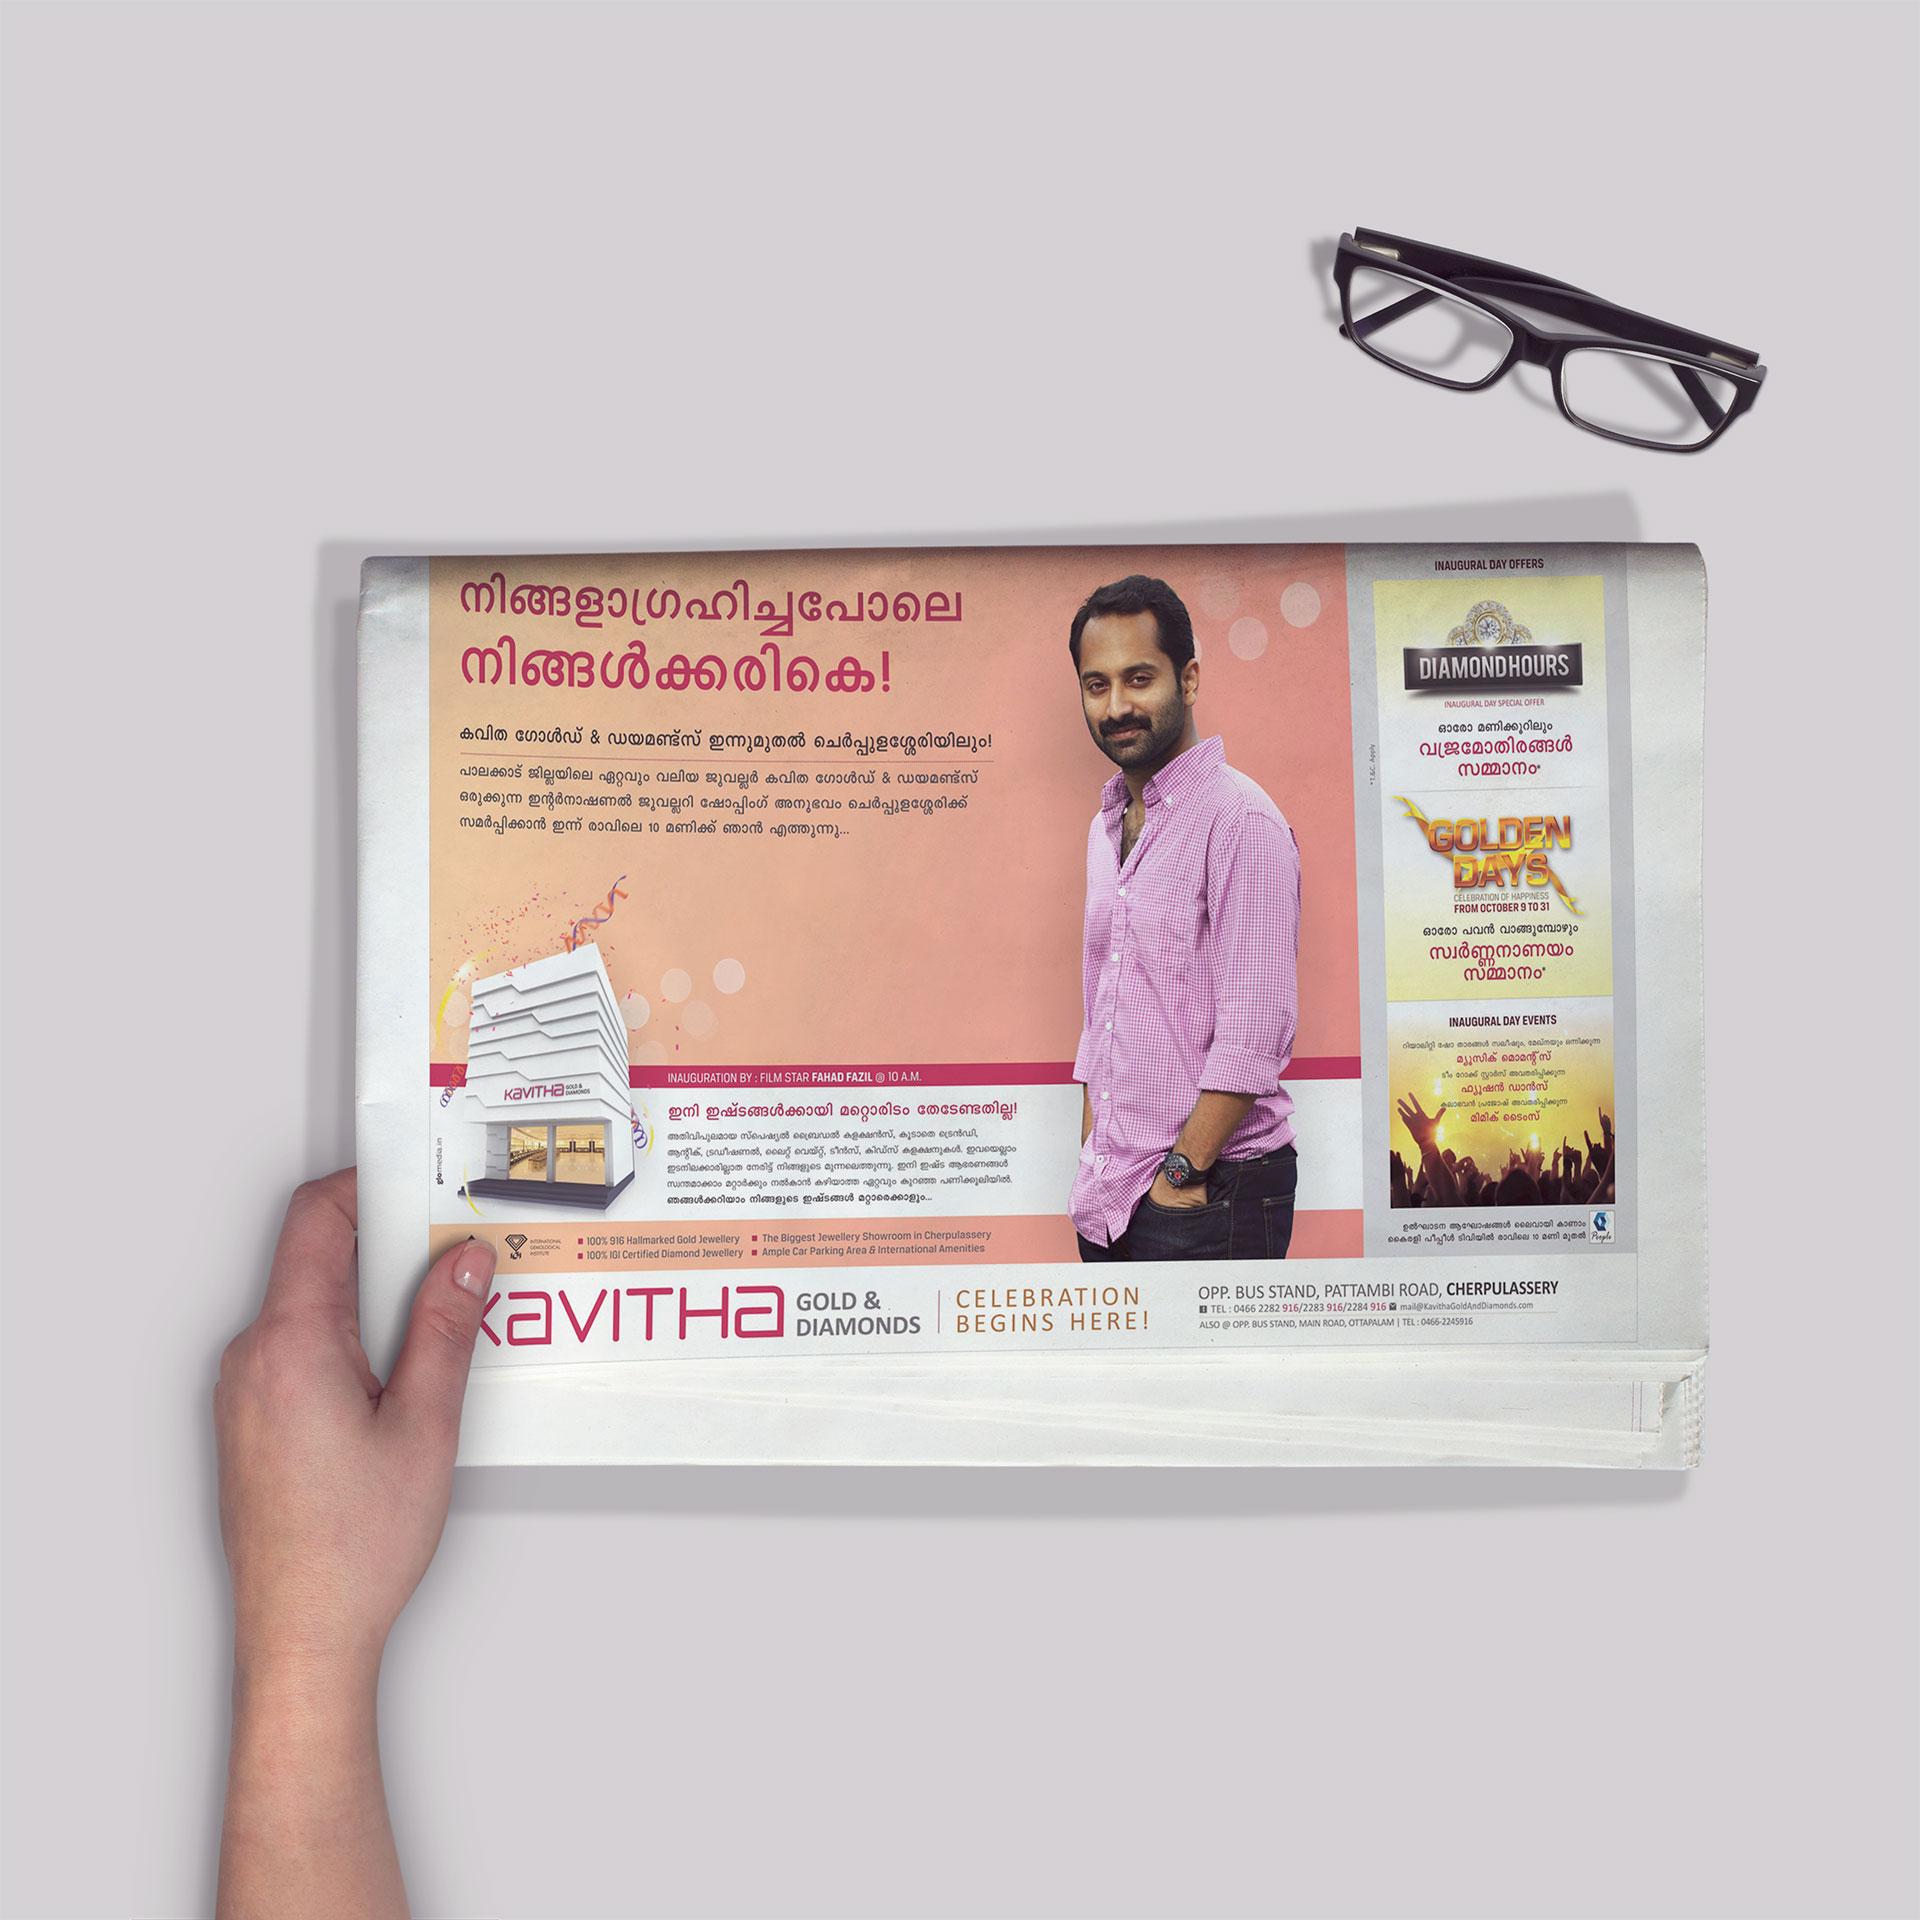 Actor Fahad fazil on a Kavitha Gold & Diamonds Newspaper advertisment